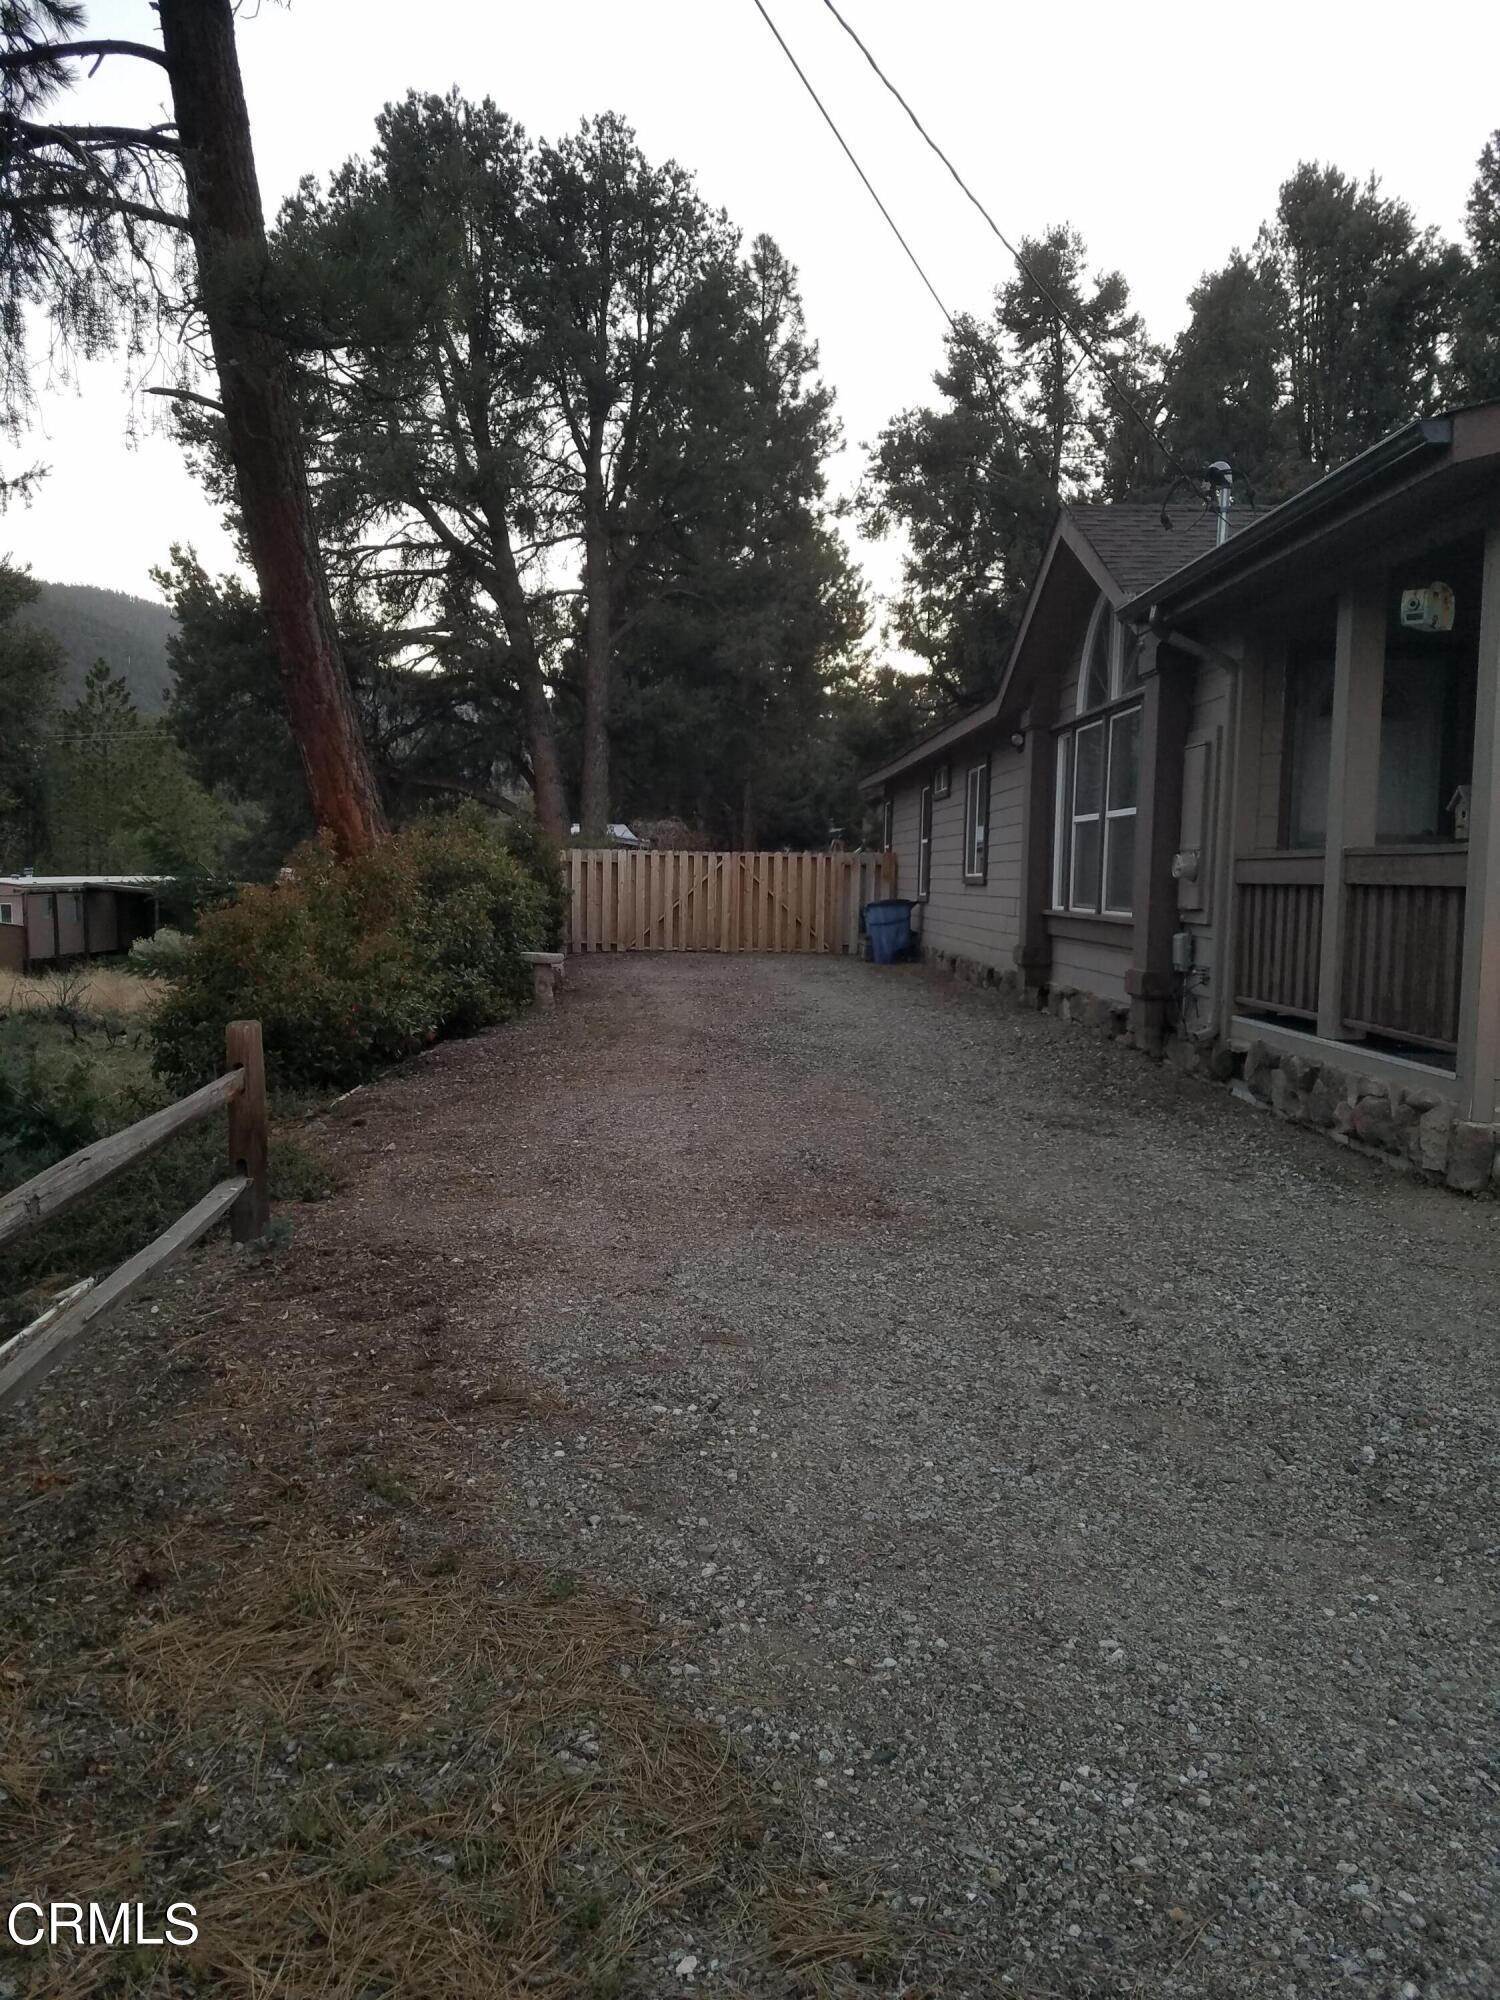 41. Single Family Homes for Sale at 2805 Kodiak Way Pine Mountain Club, California 93222 United States